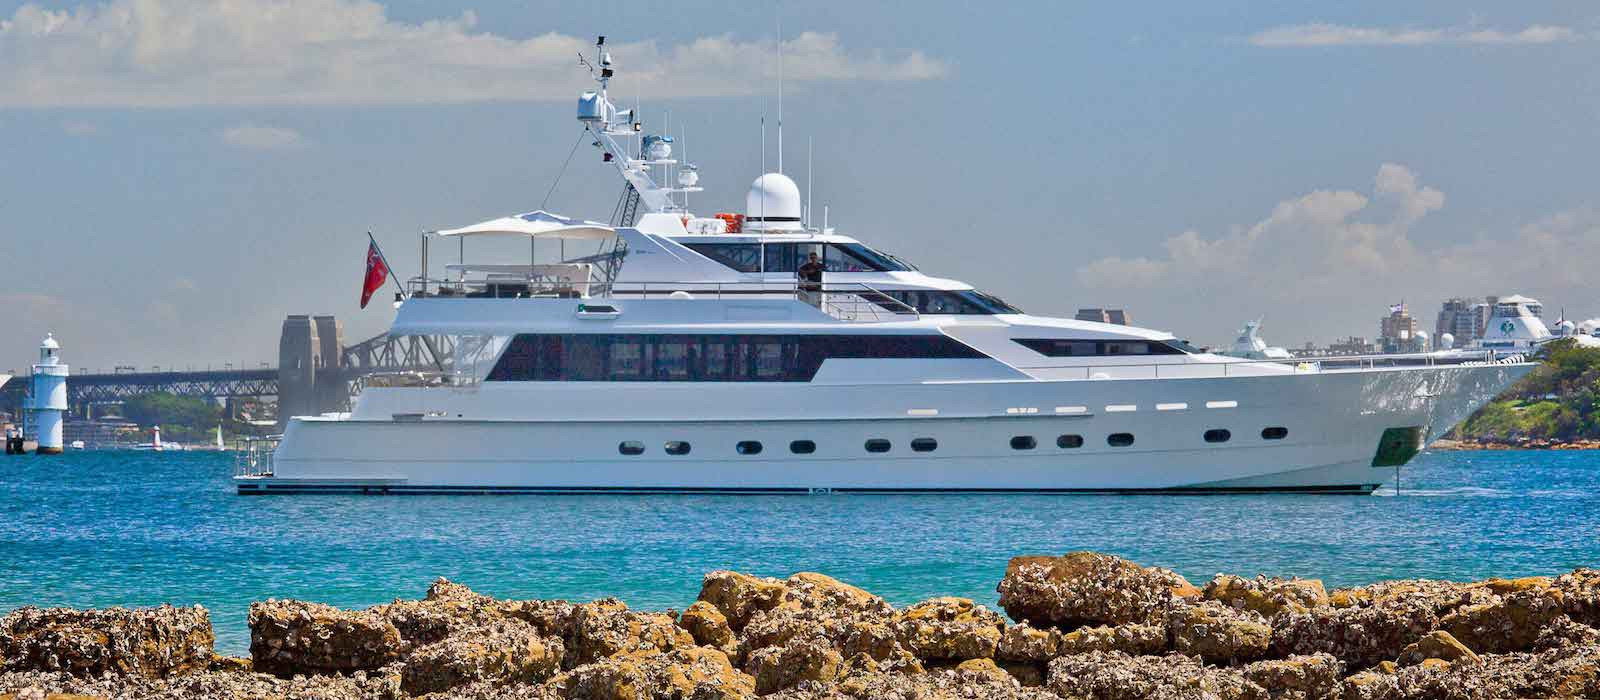 Superyacht hire on Oscar II on crystal clear waters